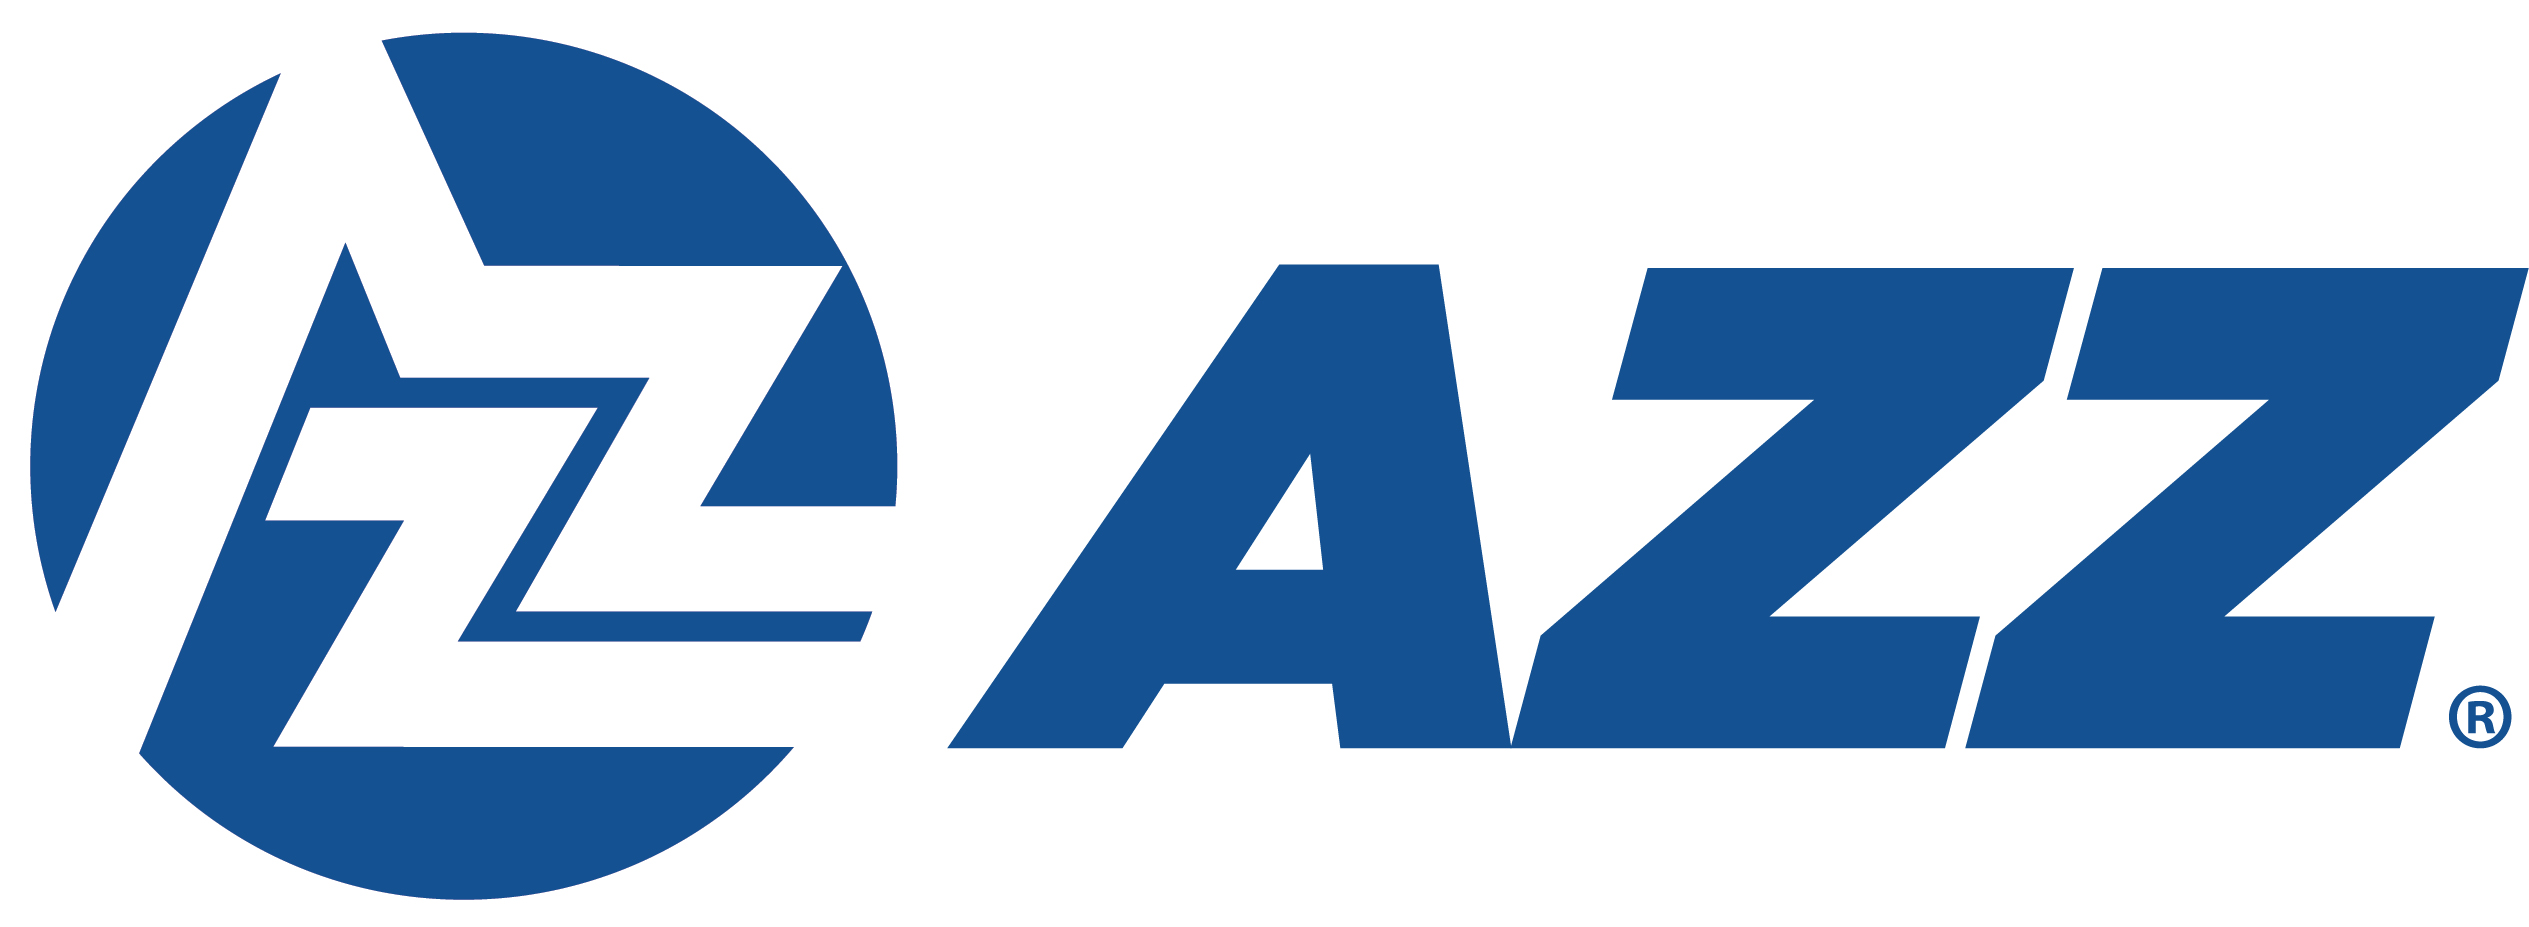 azz-20220228_g1.jpg